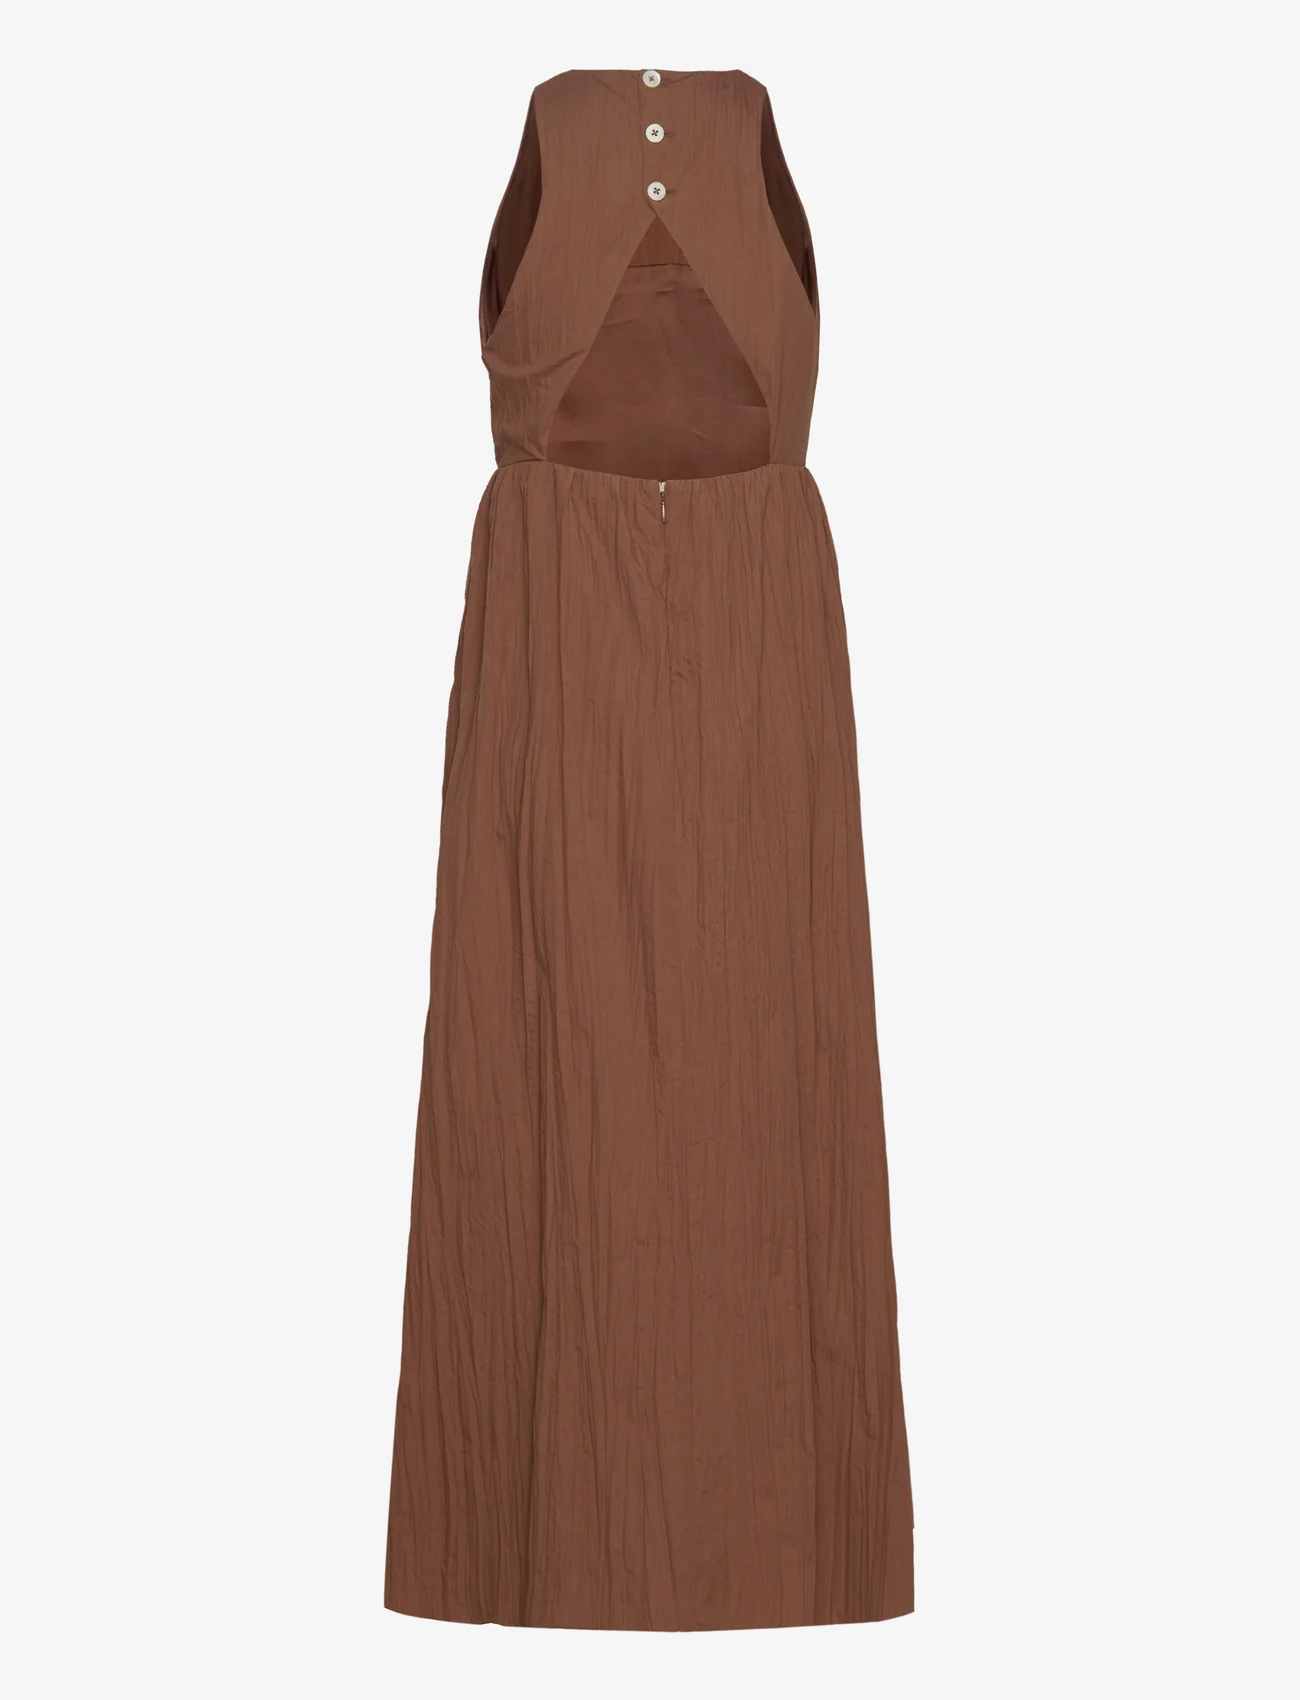 Hope - Cut-Out Dress - ilgos suknelės - camel beige crinkled - 1